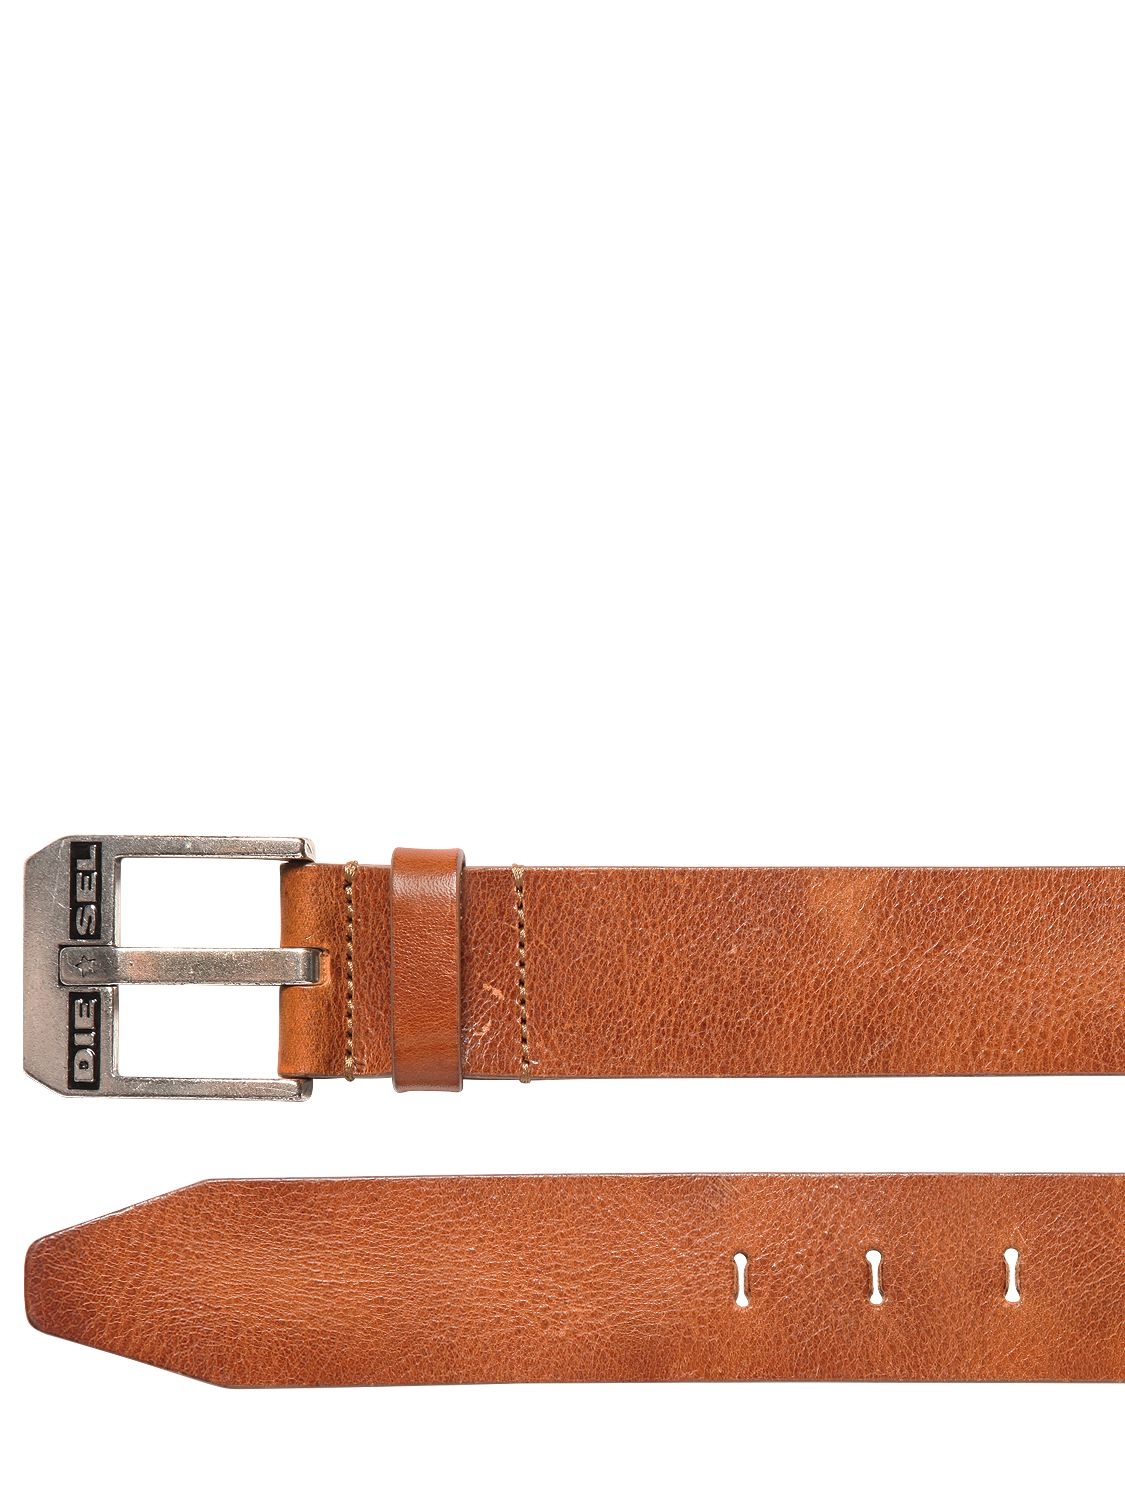 Lyst - Diesel Vintage Effect Leather Belt in Brown for Men